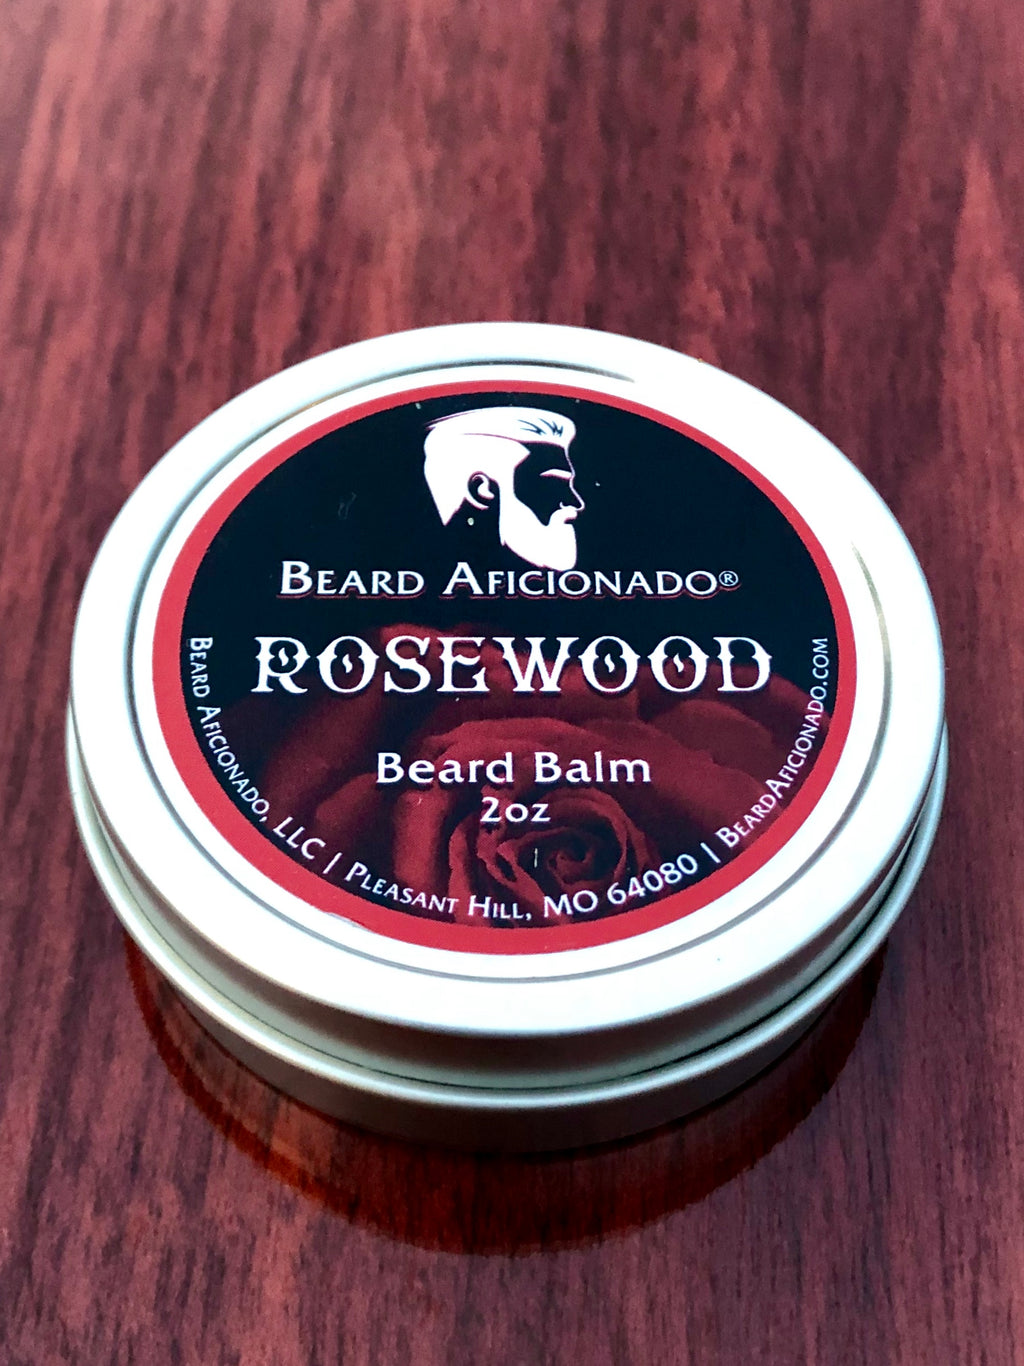 Beard Aficionado Rosewood Beard Balm